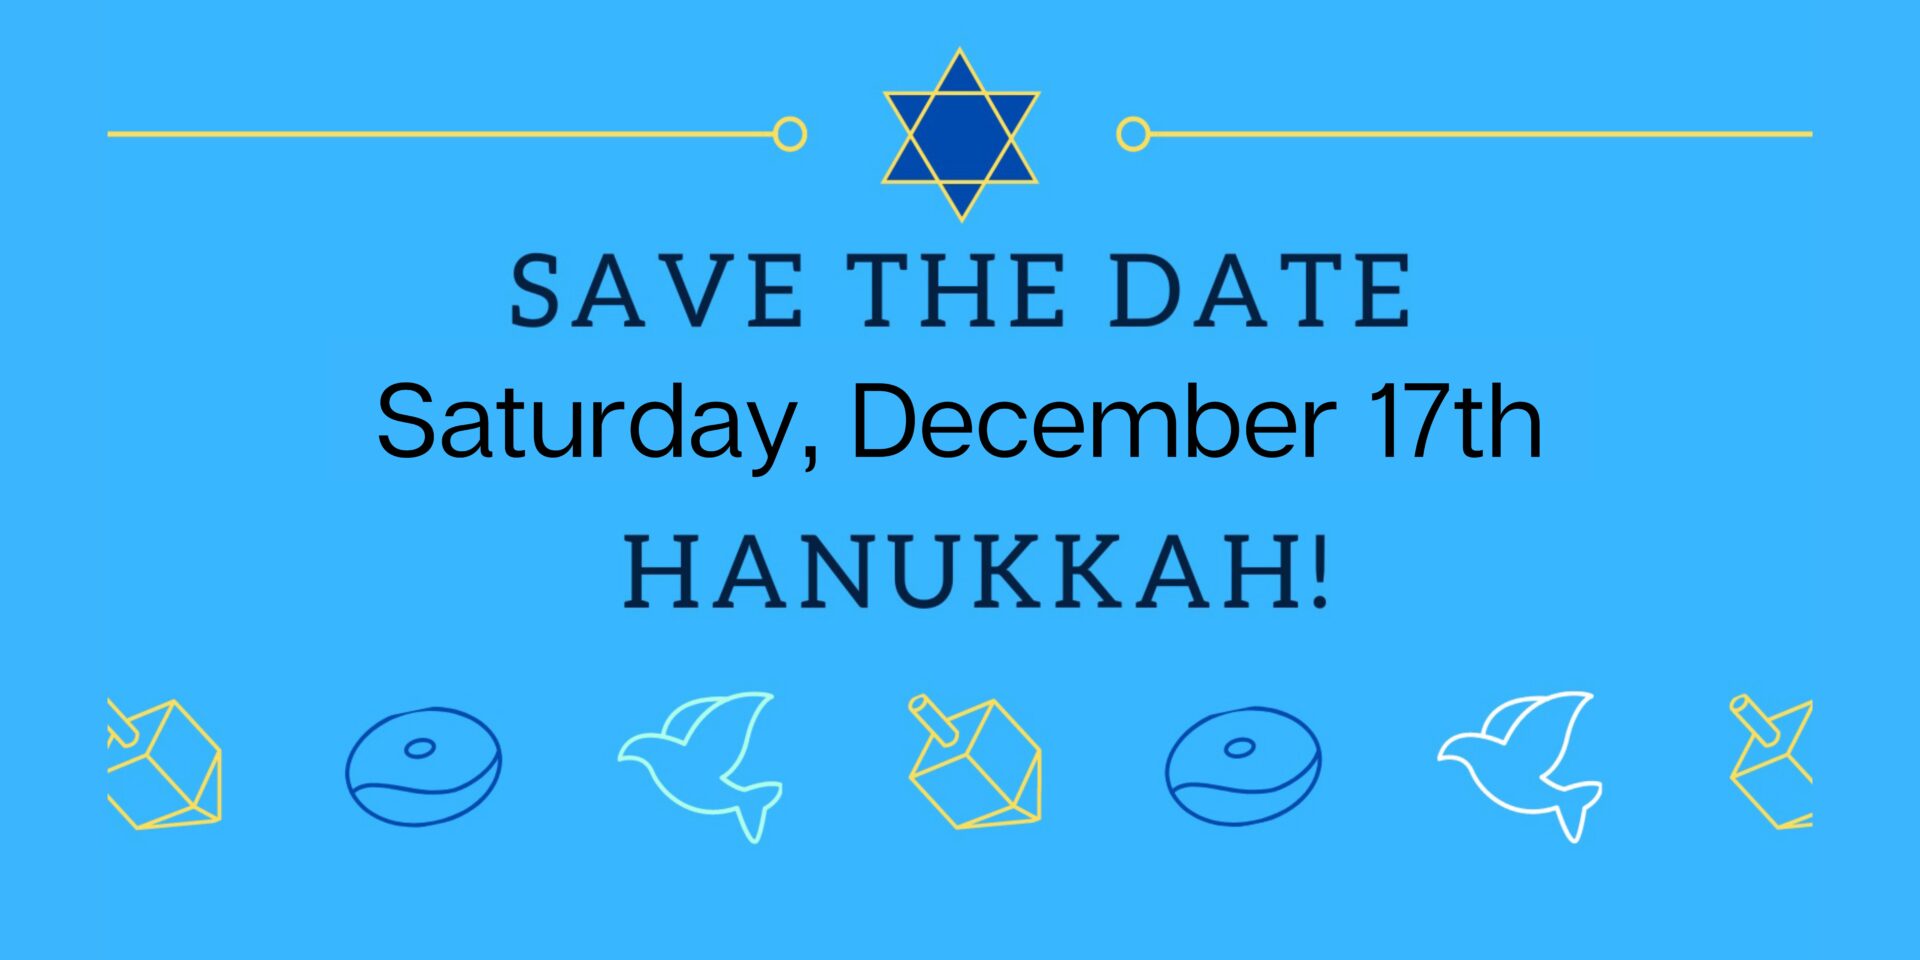 Save the Date, Wednesday, December 17. Hanukkah